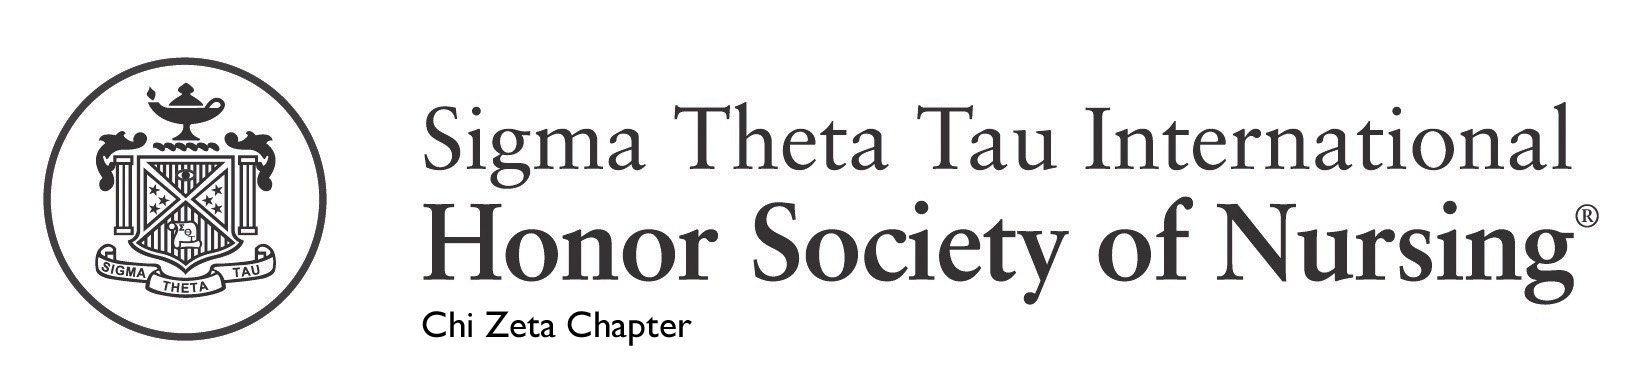 Chi Zeta Chapter Honor Society of Nursing, Sigma Theta Tau International